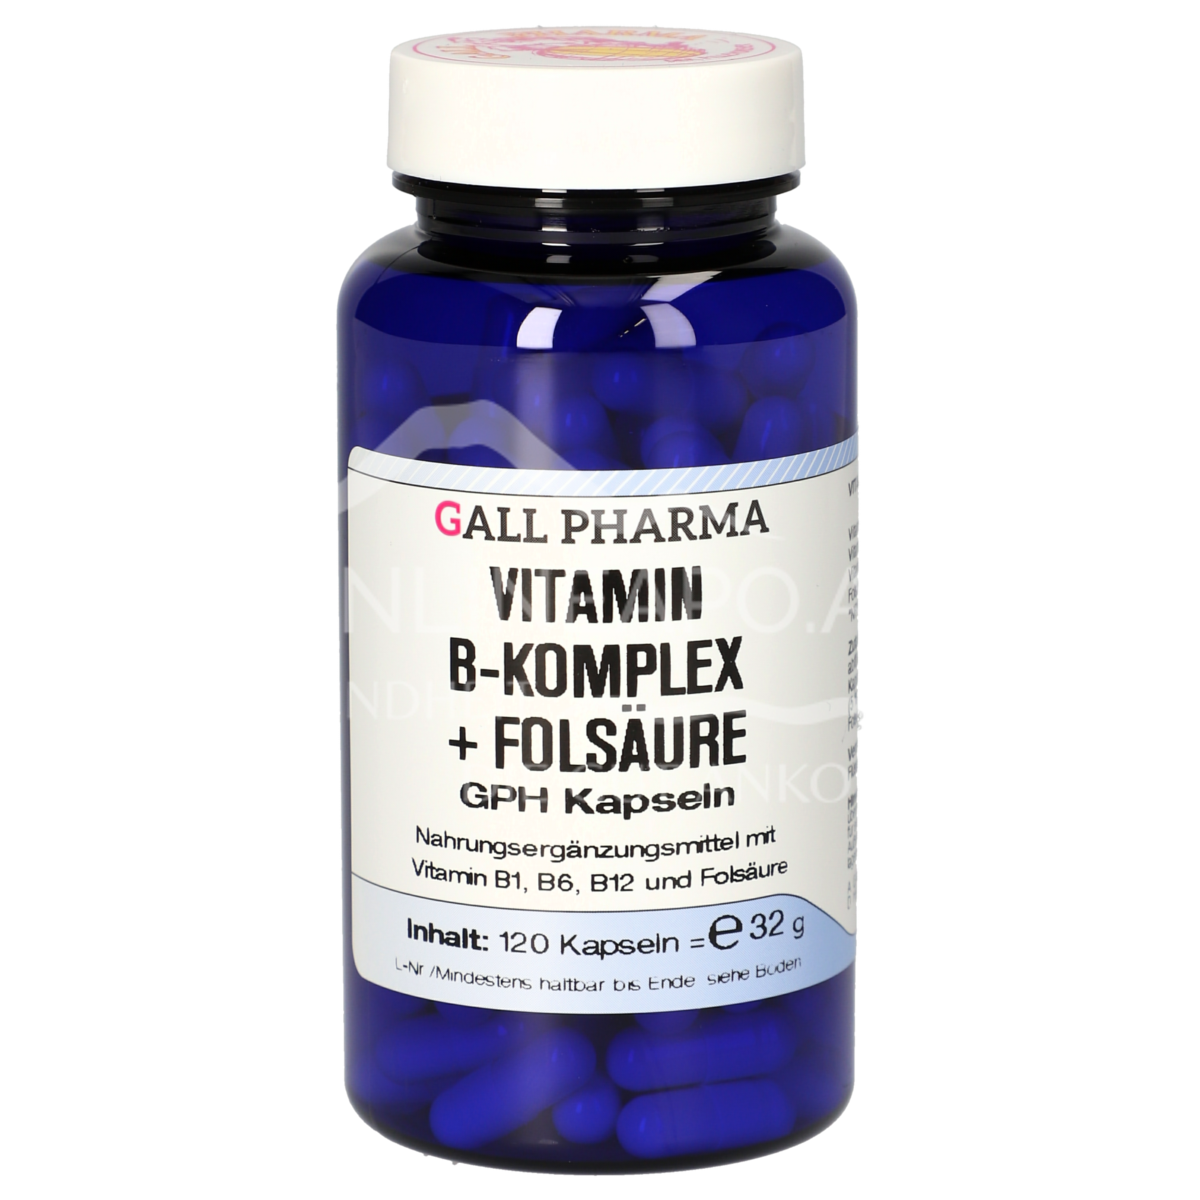 Gall Pharma Vitamin B Komplex + Folsäure Kapseln